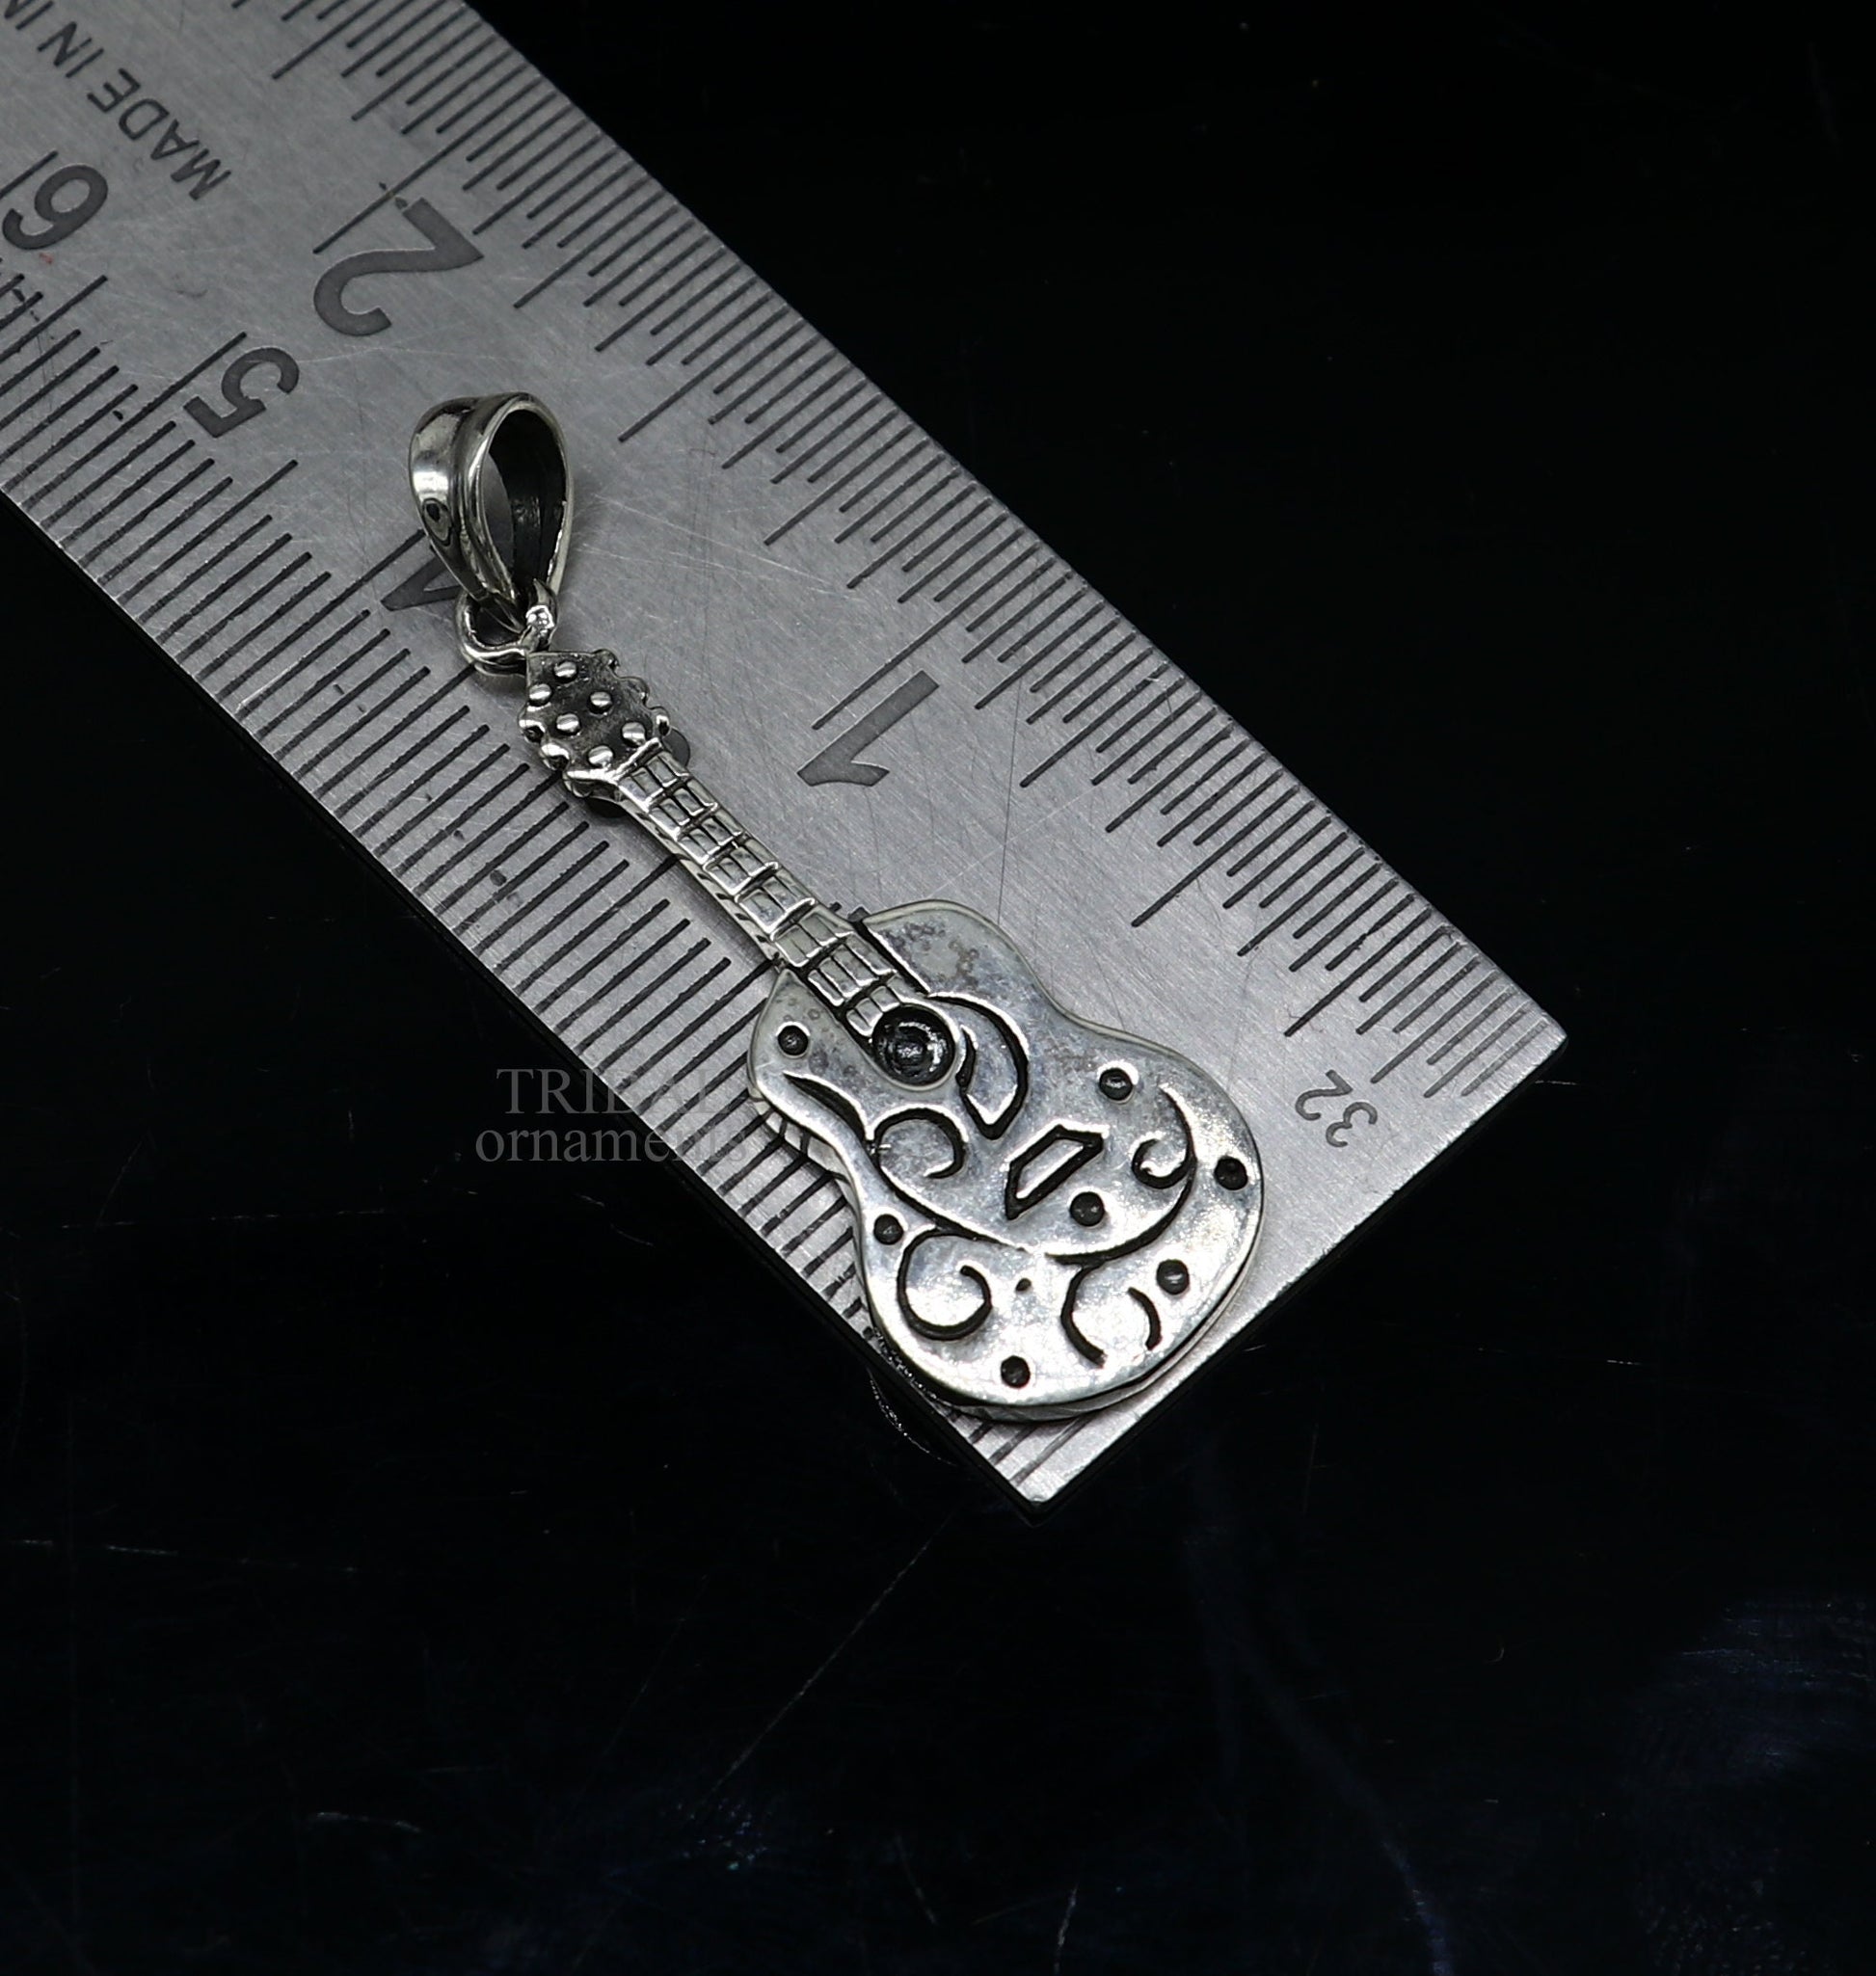 925 sterling silver handmade amazing small guitar design pendant, amazing stylish unisex pendant unisex jewelry tribal jewelry ssp1453 - TRIBAL ORNAMENTS